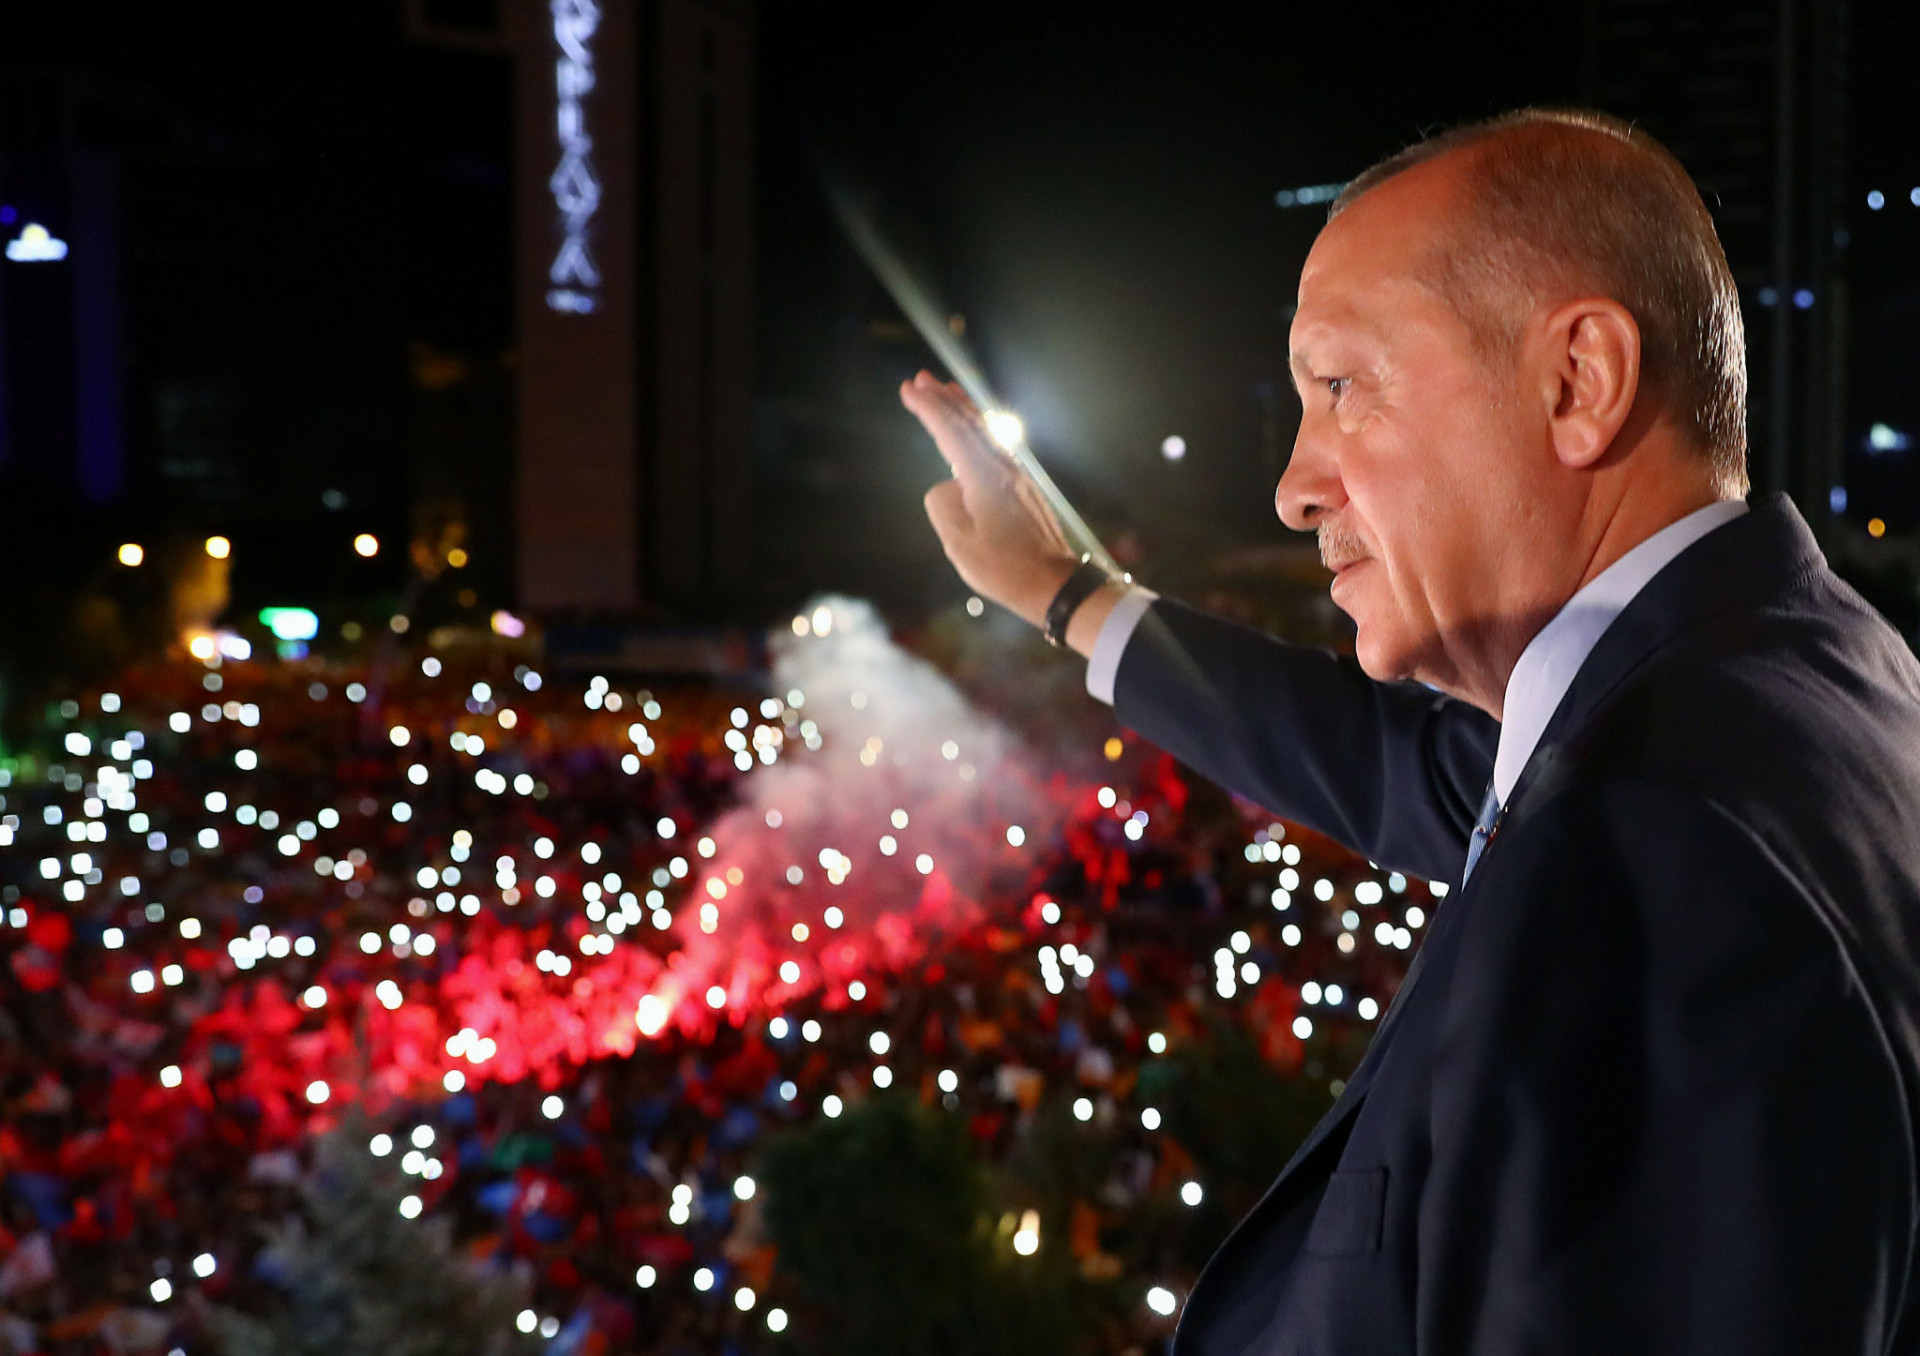 Tayyip Erdogan